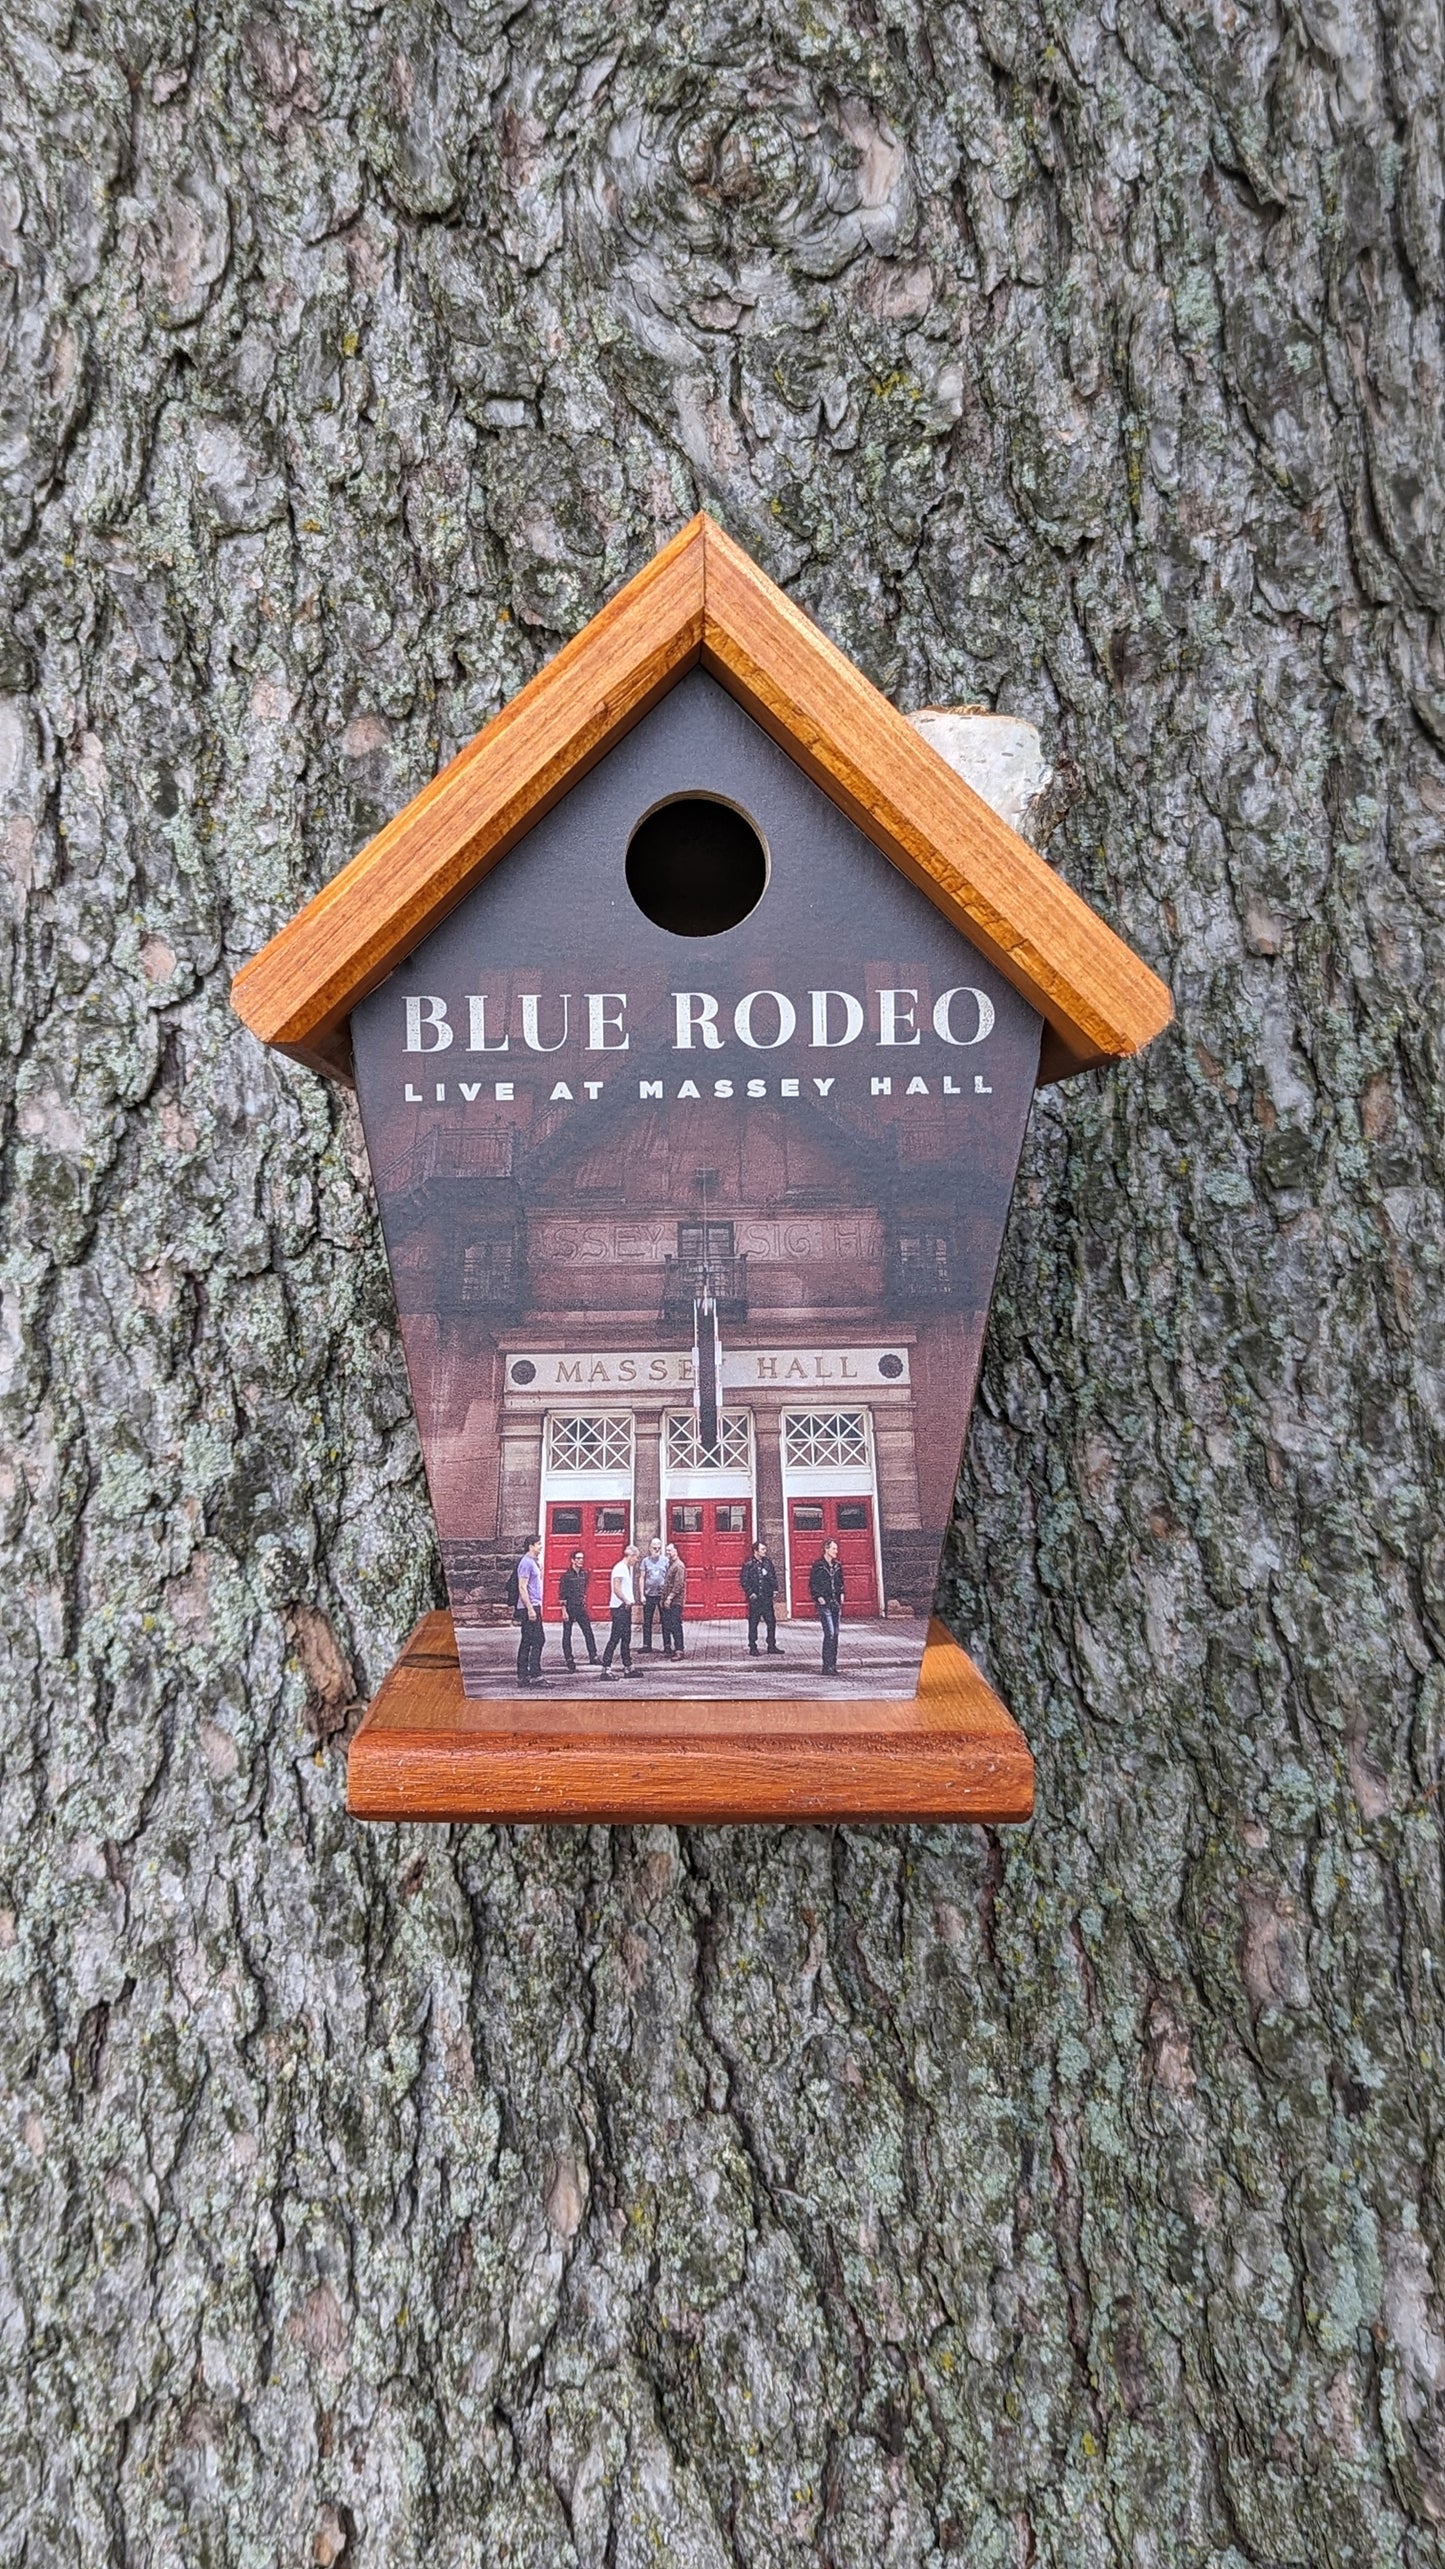 Blue Rodeo Massey Hall Birdhouse